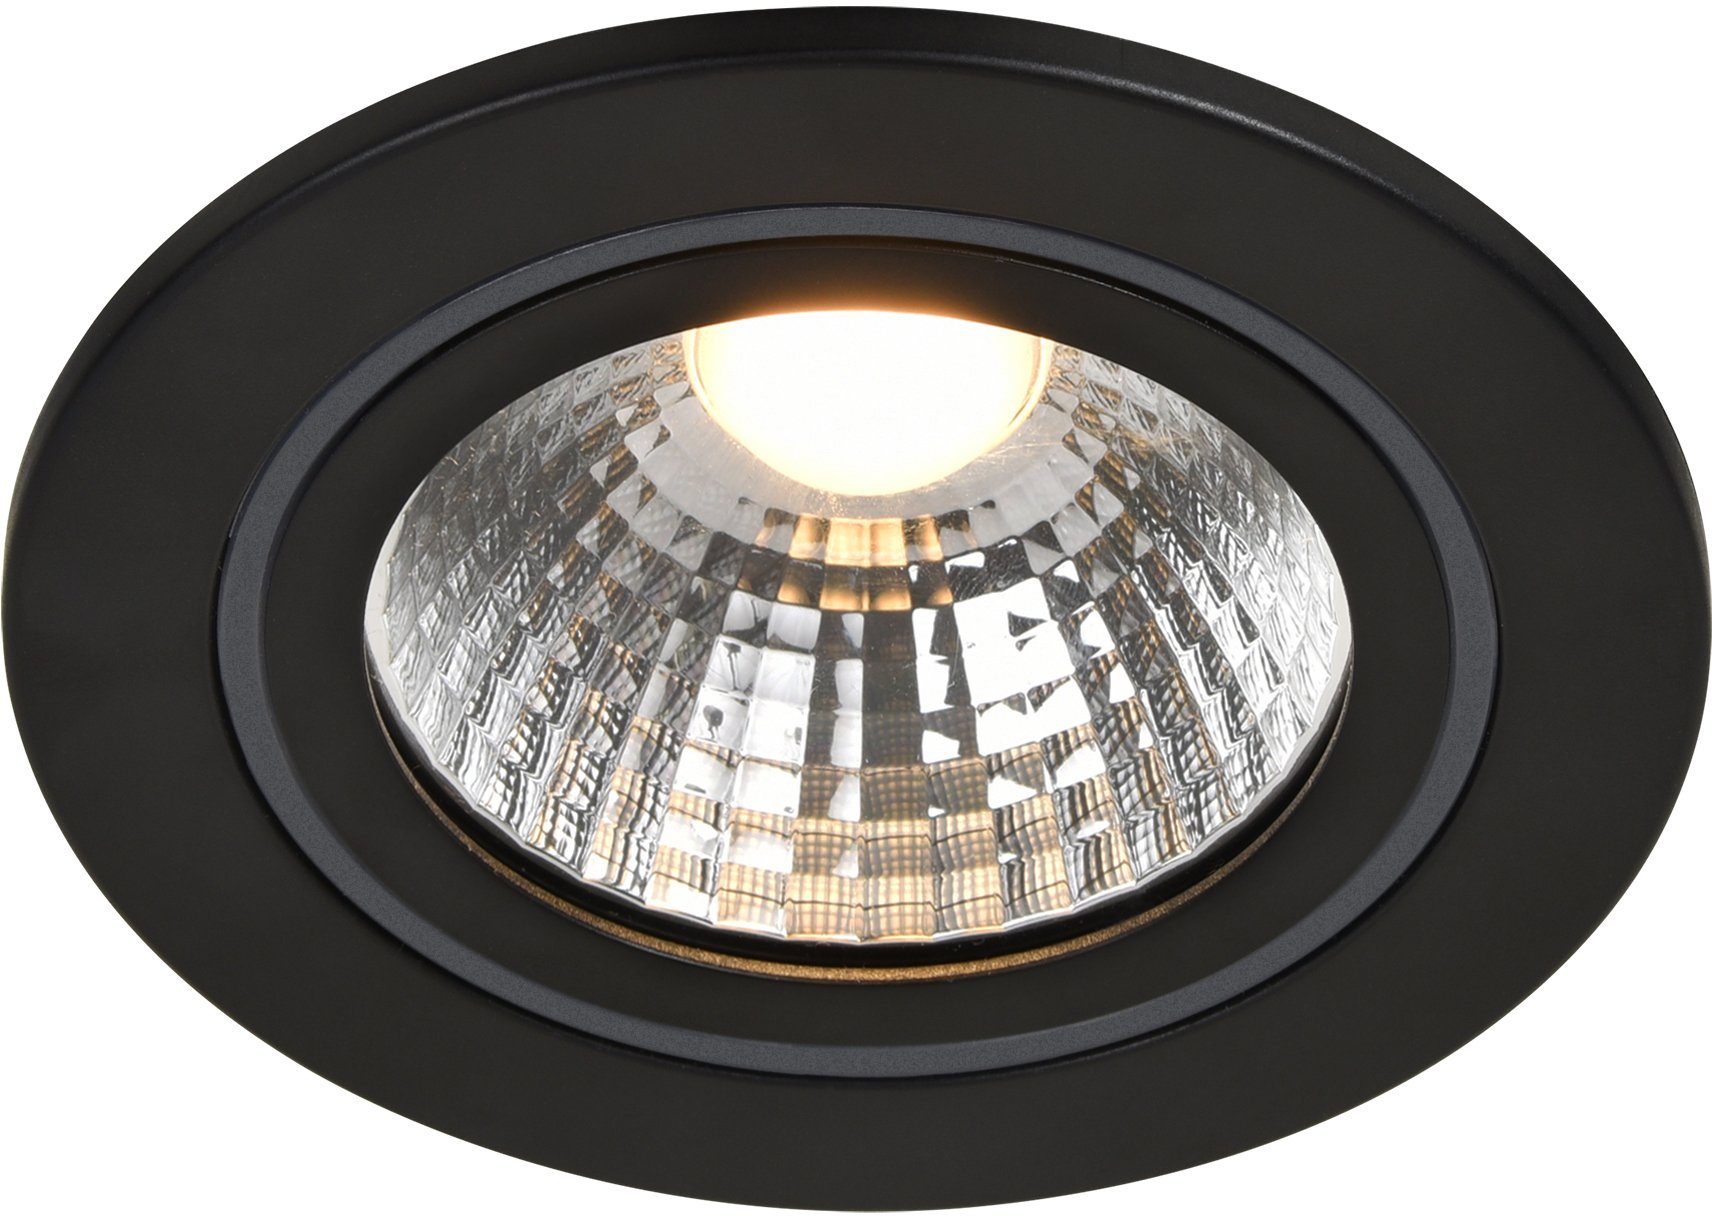 Nordlux Deckenstrahler Alec, LED fest integriert, Warmweiß, inkl. 6W LED, 480 Lumen, inkl. 3 Stufen Dimmer | Deckenstrahler